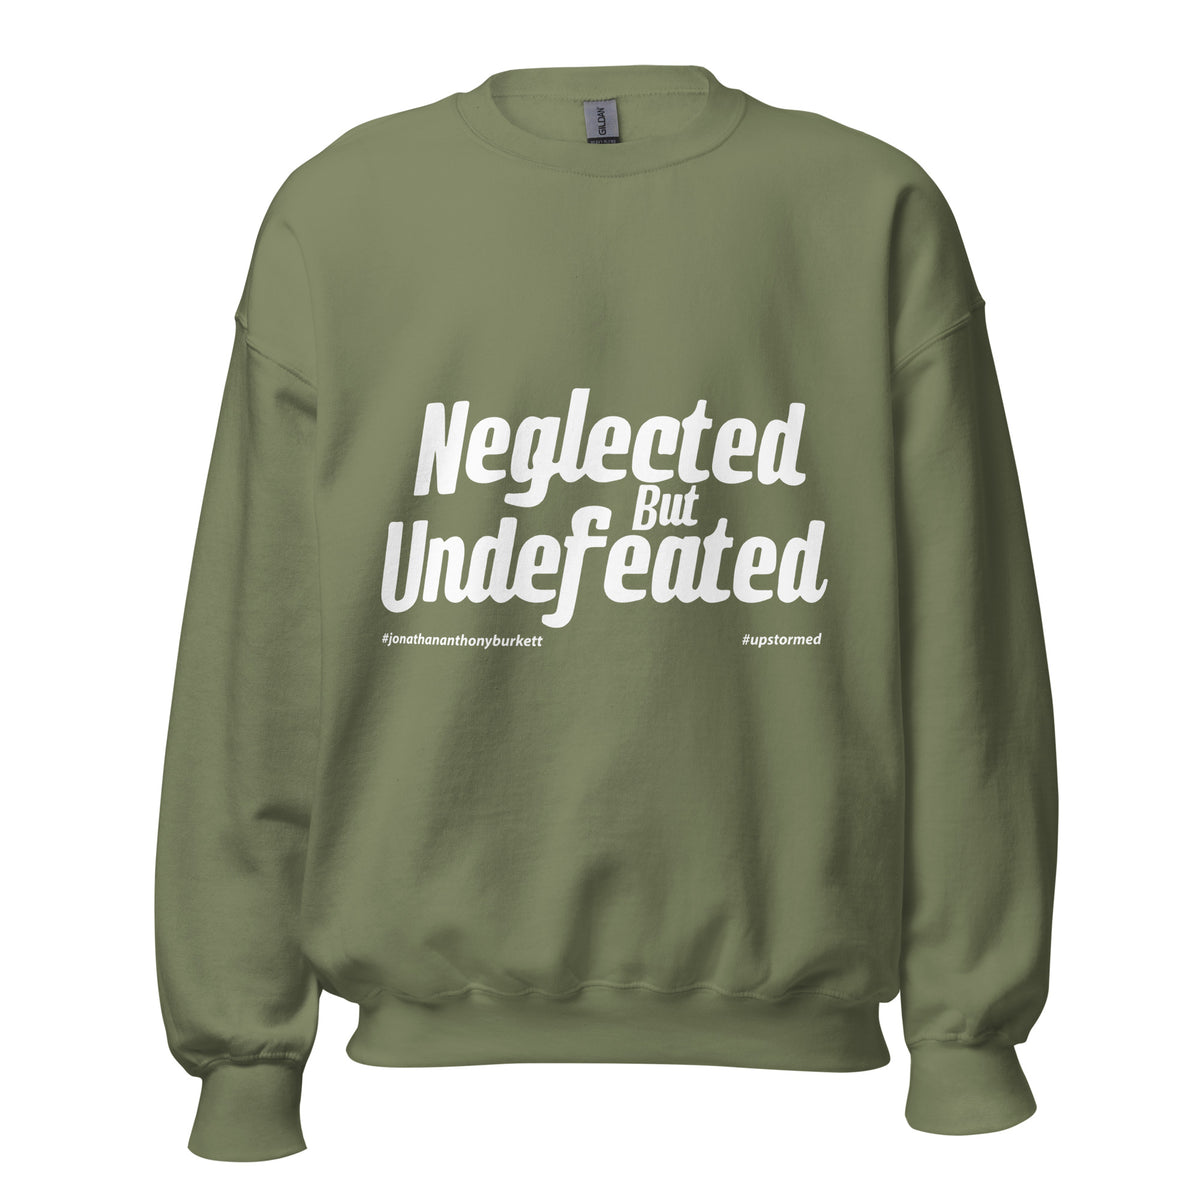 Neglected But Undefeated Upstormed Sweatshirt